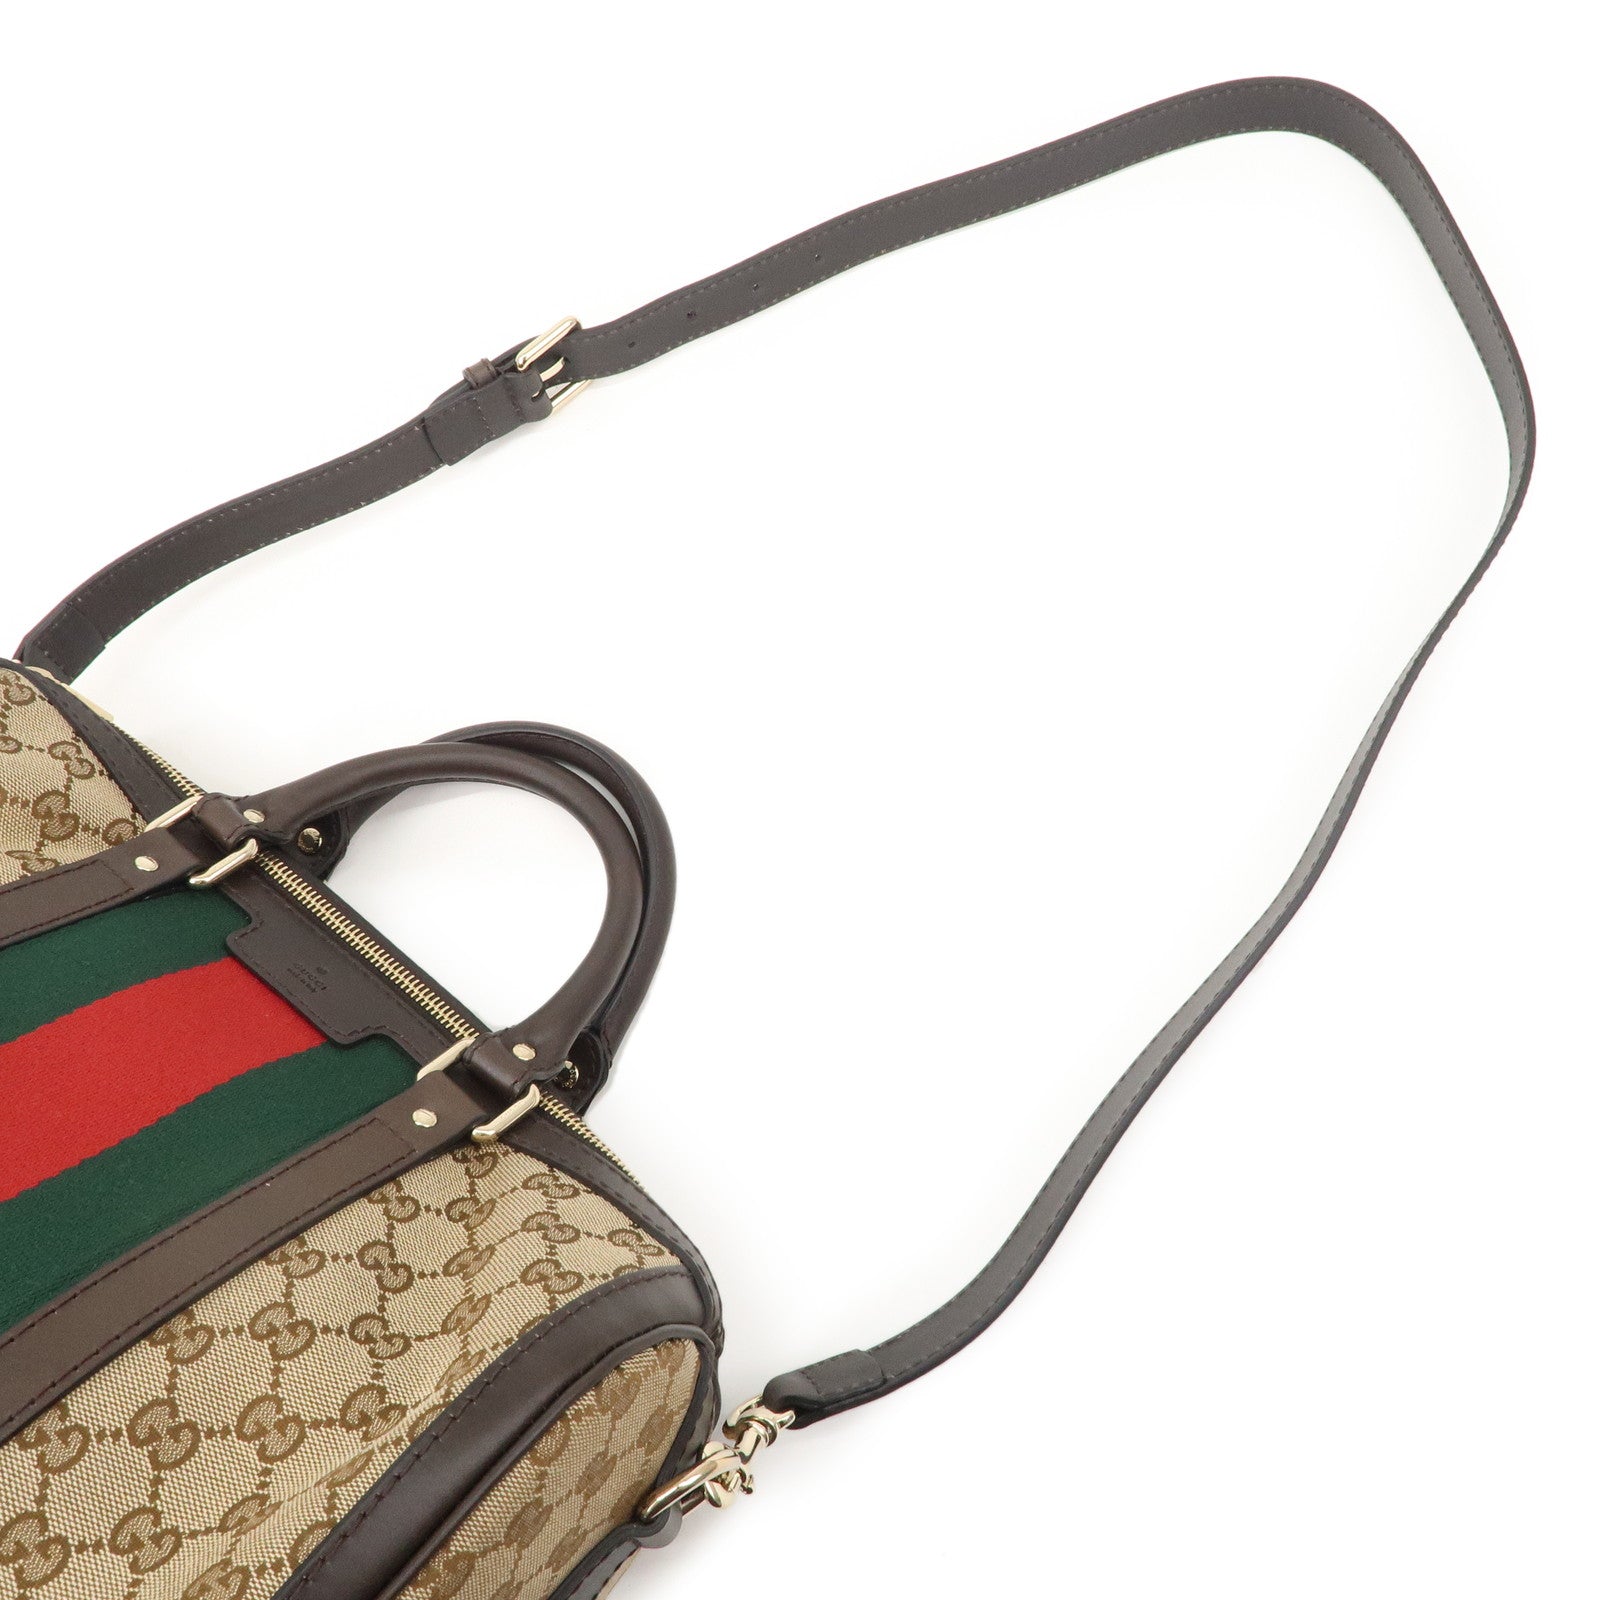 Gucci Vintage Web Original GG Boston Bag in Good Condition (247205)